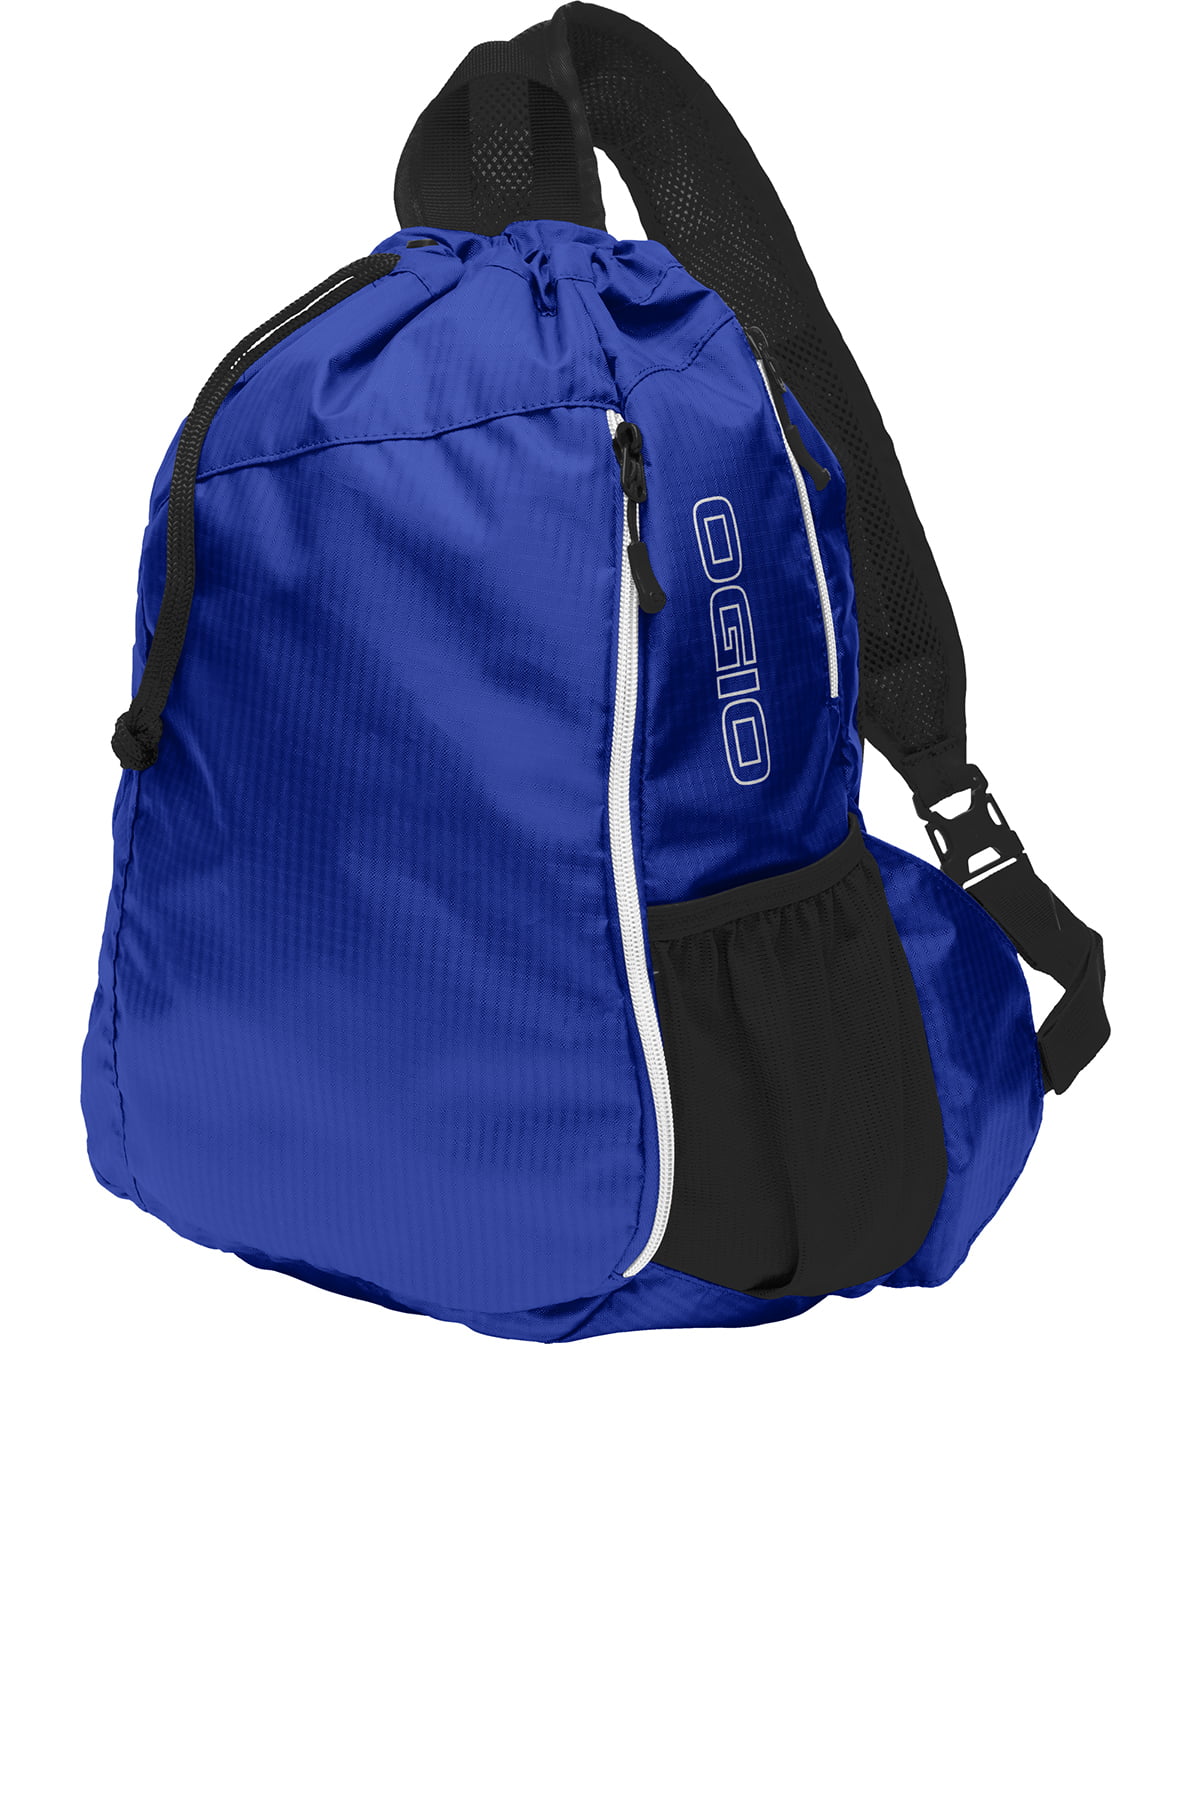 Ogio Unisex Gym School PE Drawstring Bag Training Lightweight Travel Backpack 